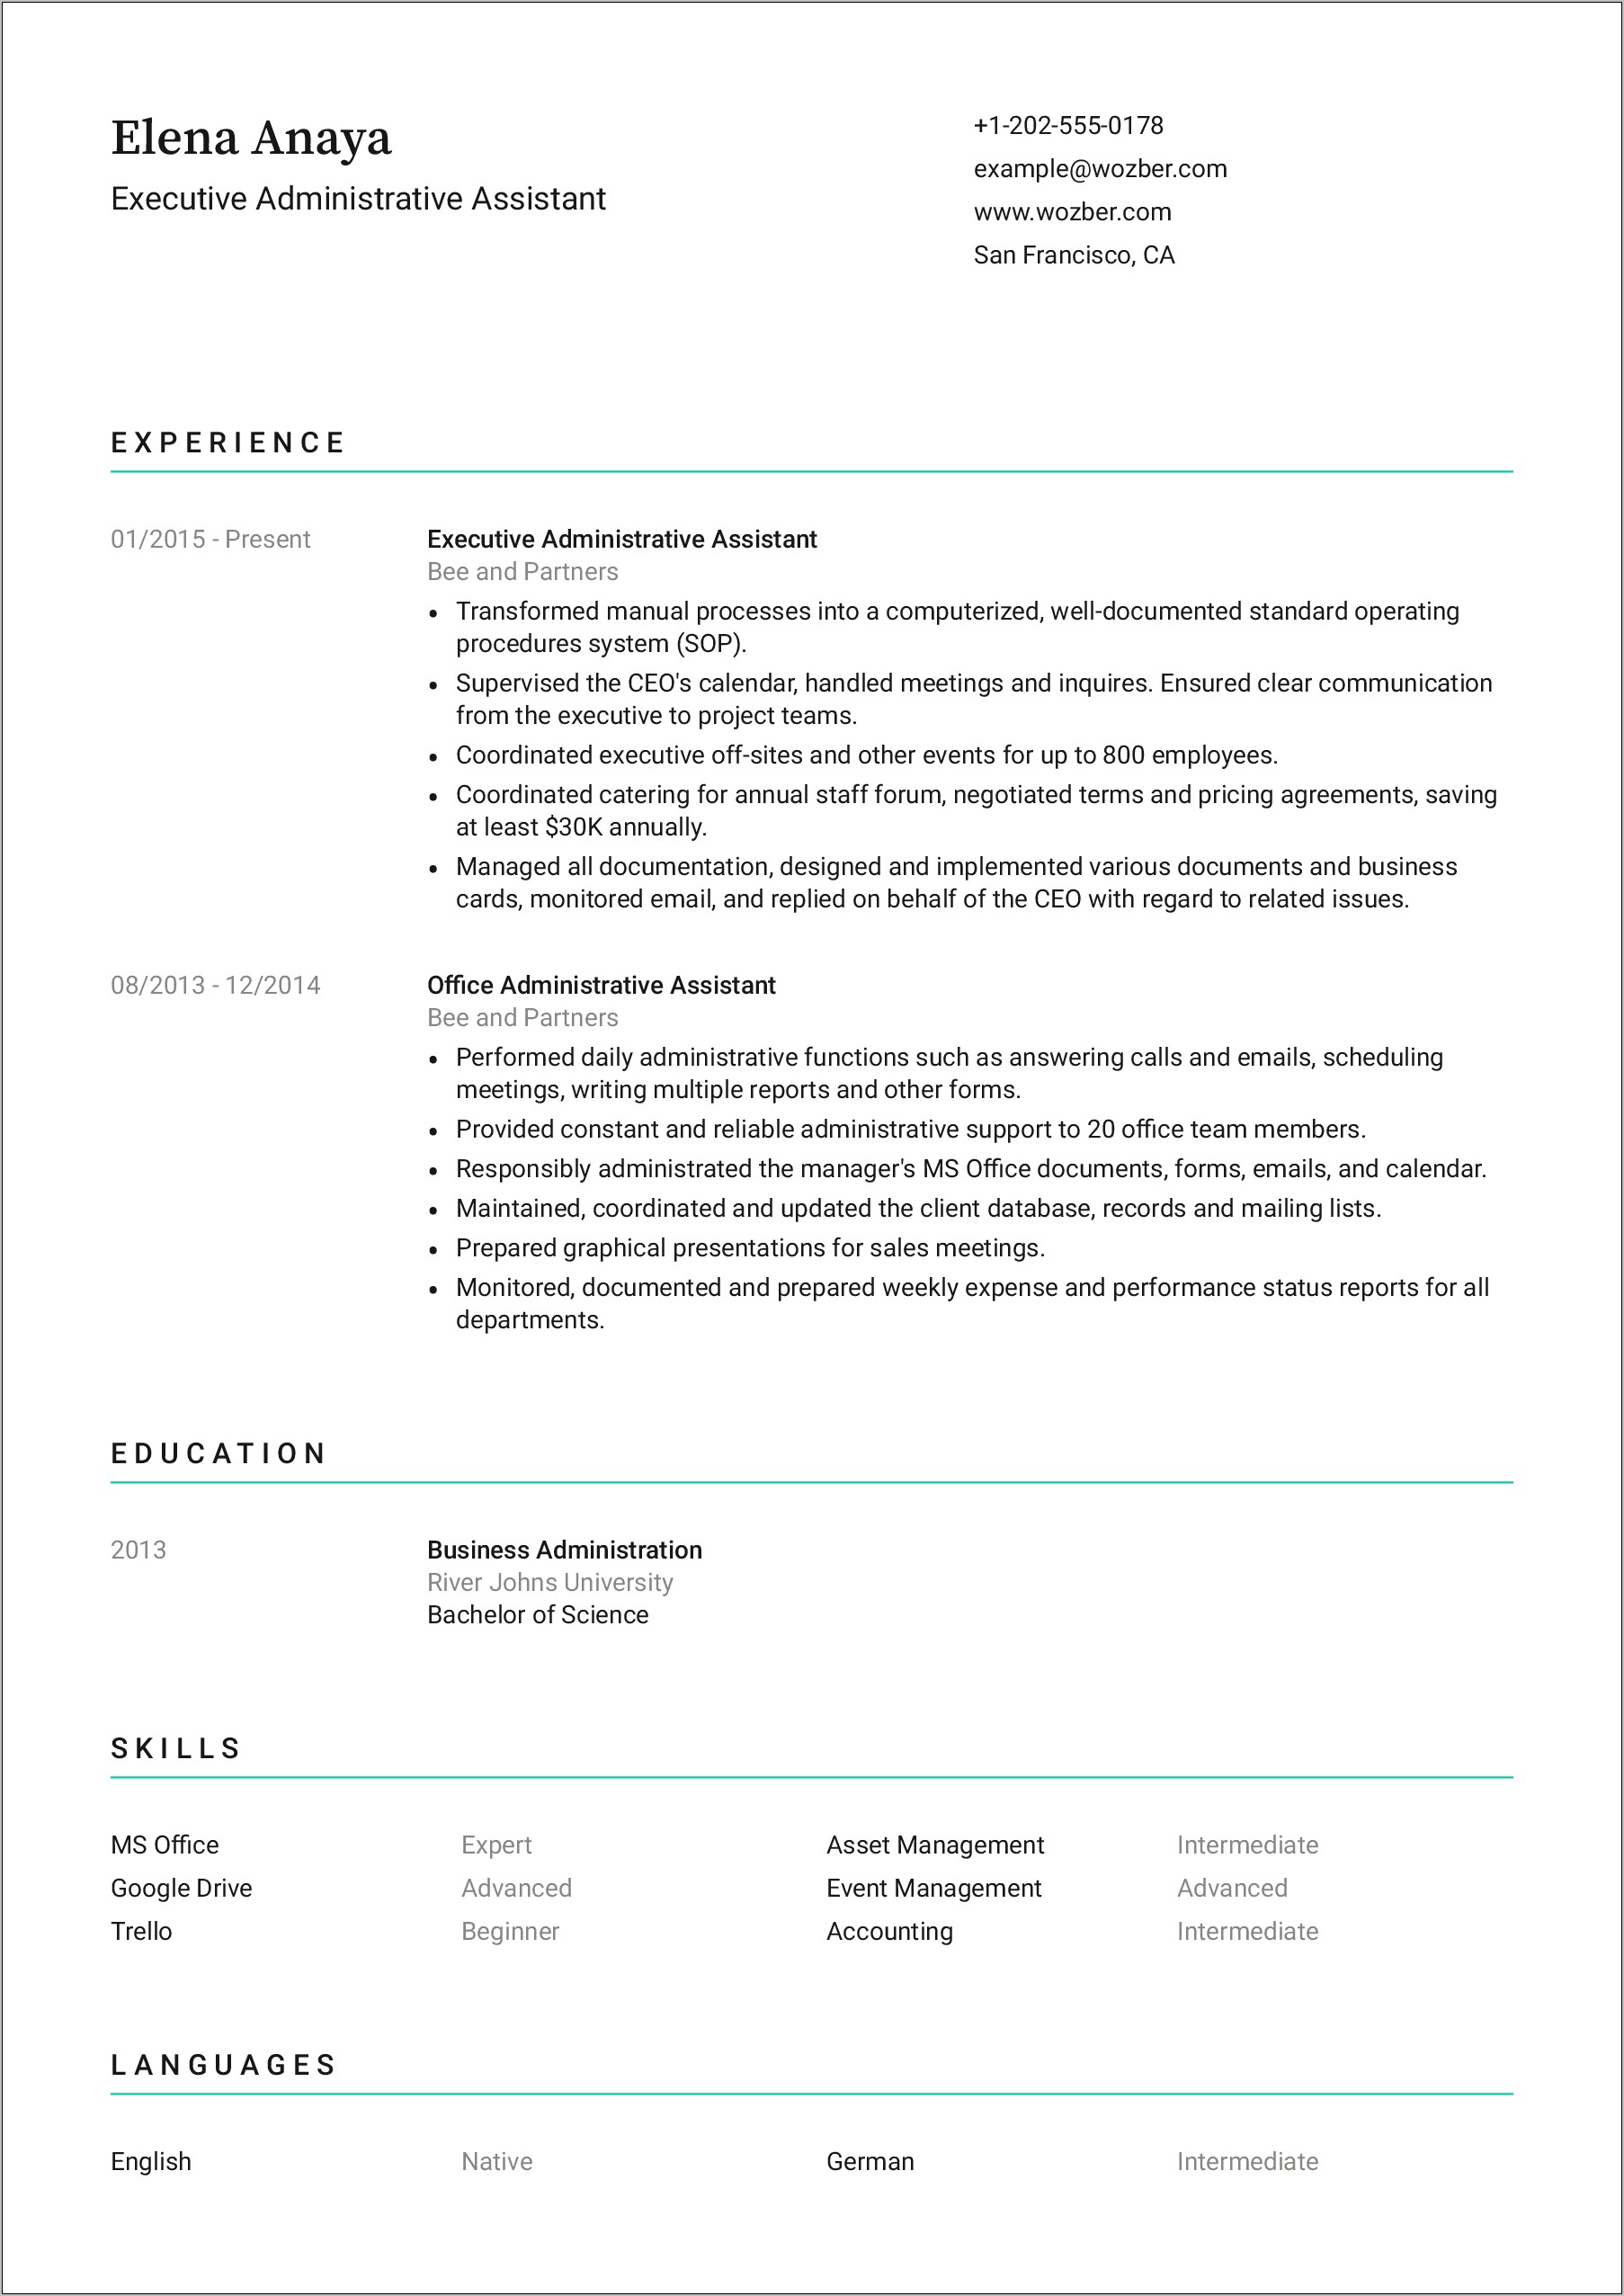 Executive Assistant Skills Based Resume